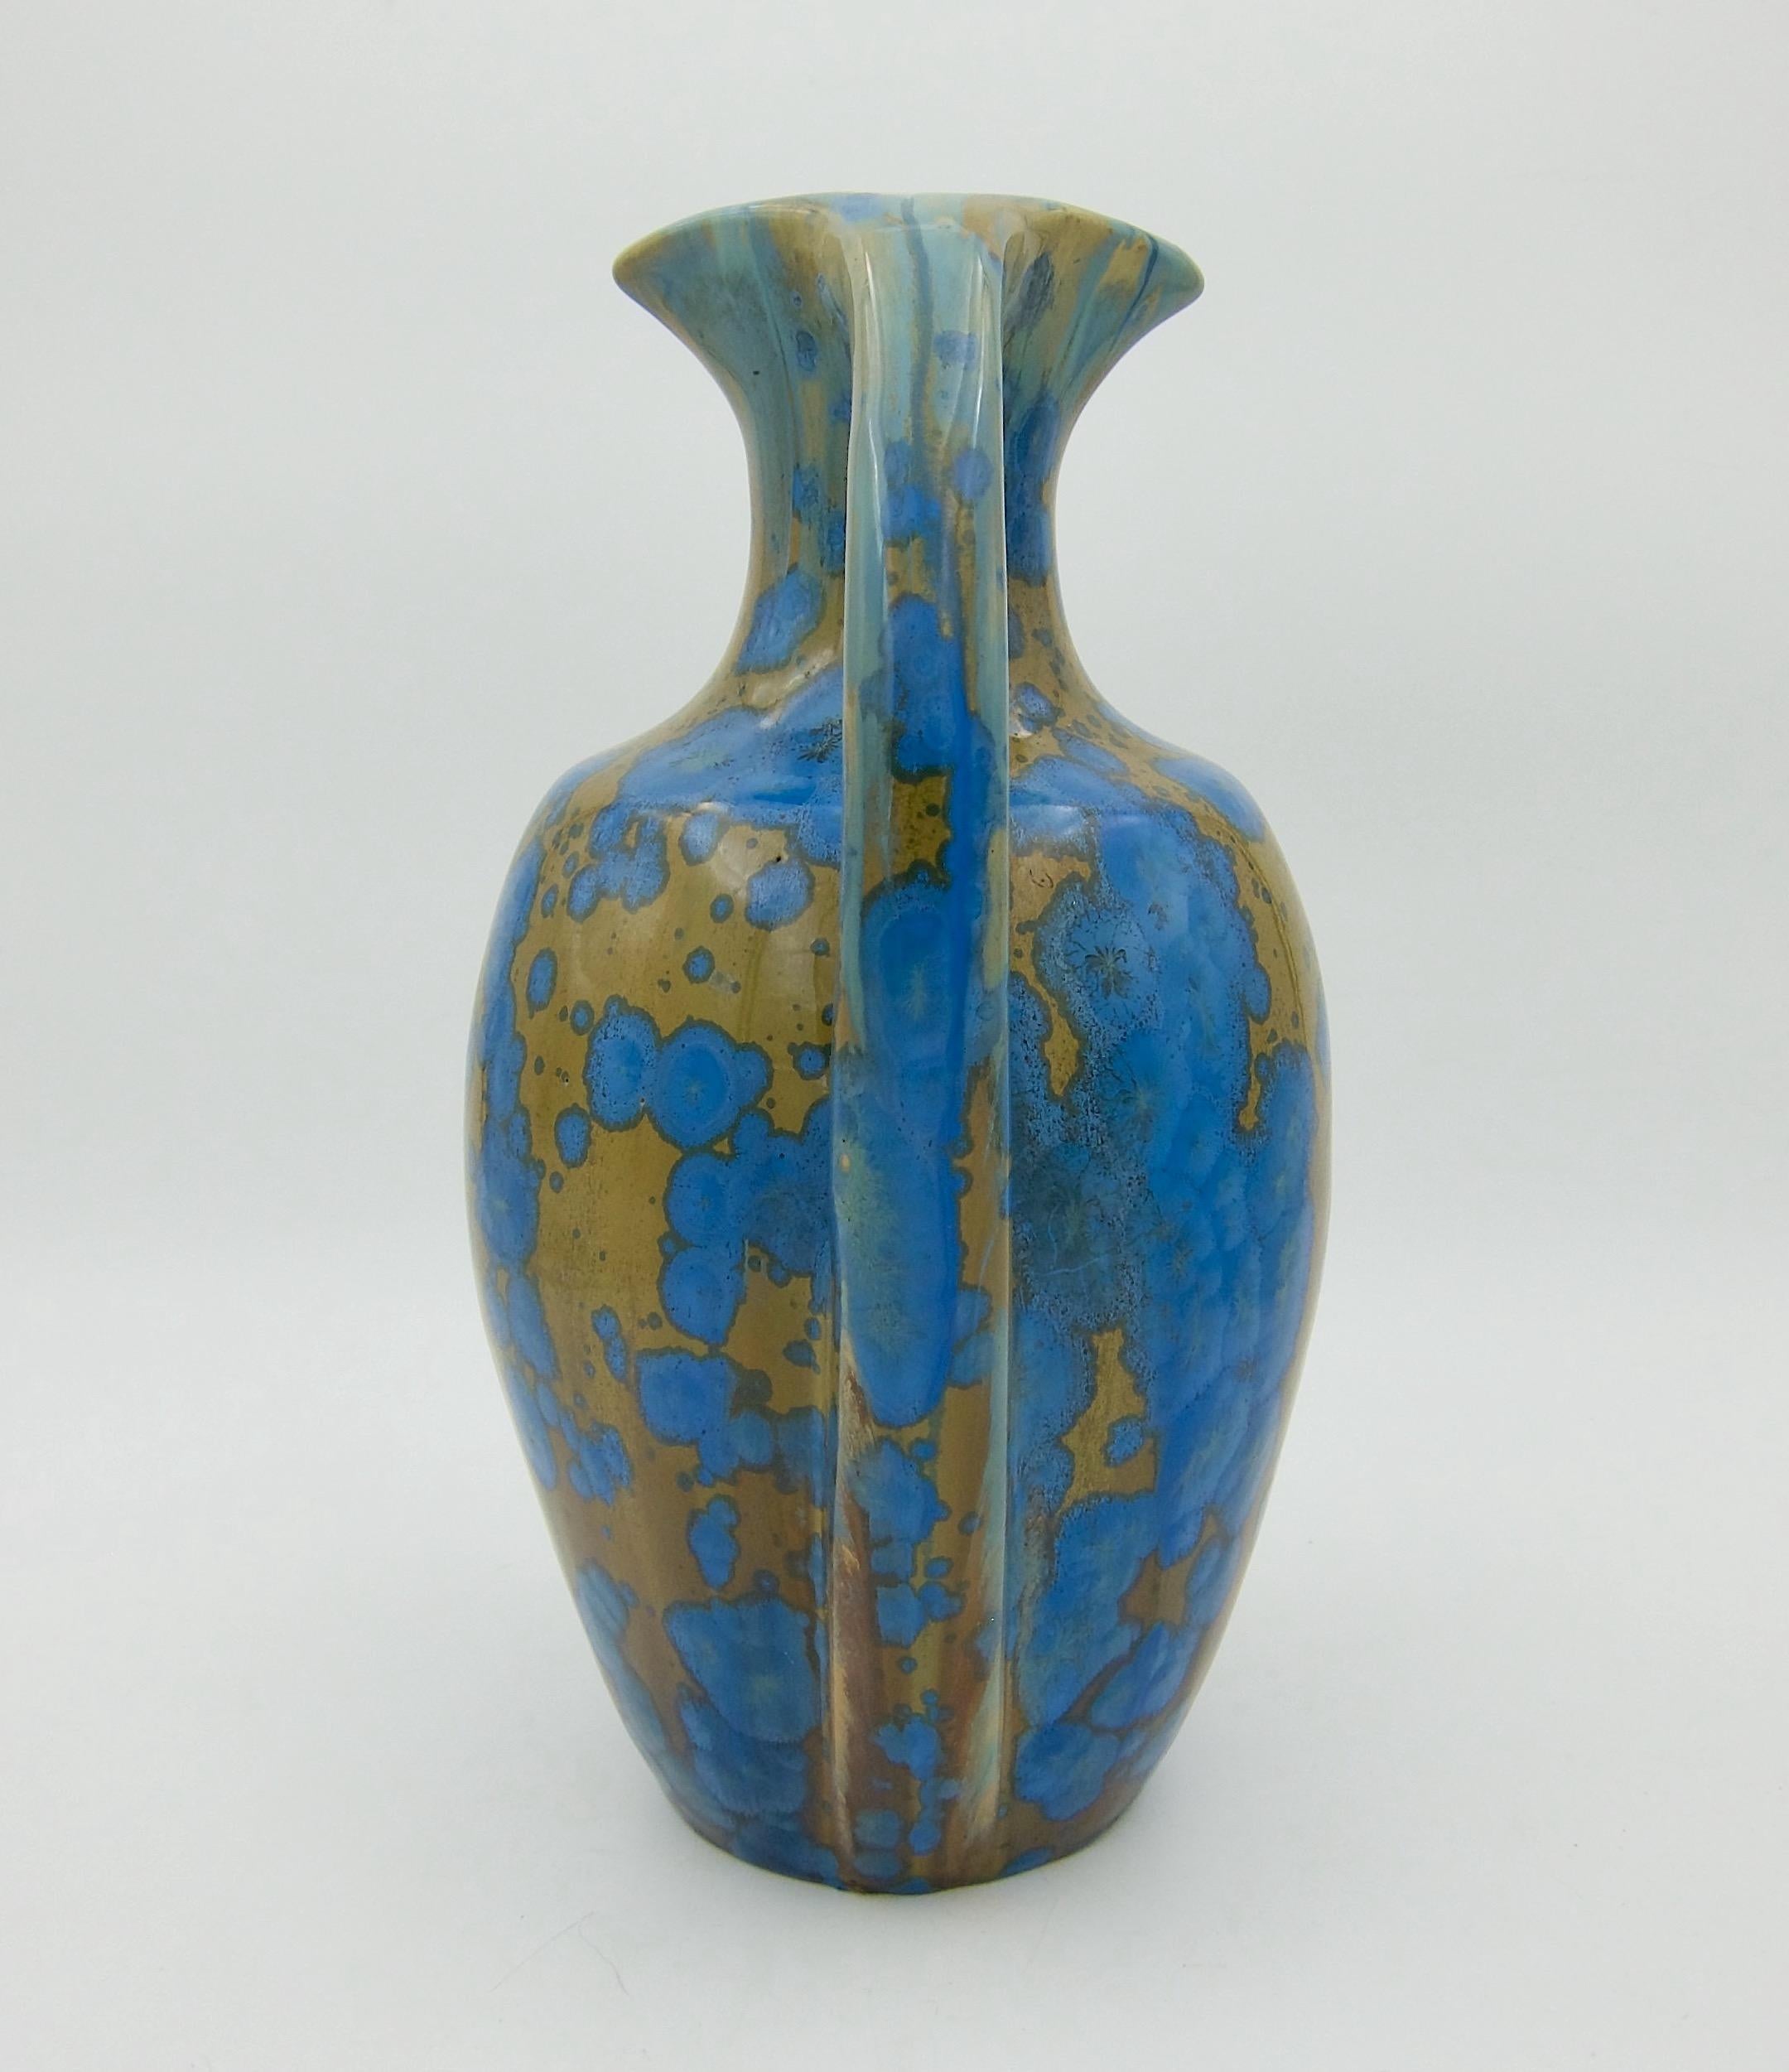 20th Century French Pierrefonds Art Pottery Vase with Blue Crystalline Glaze